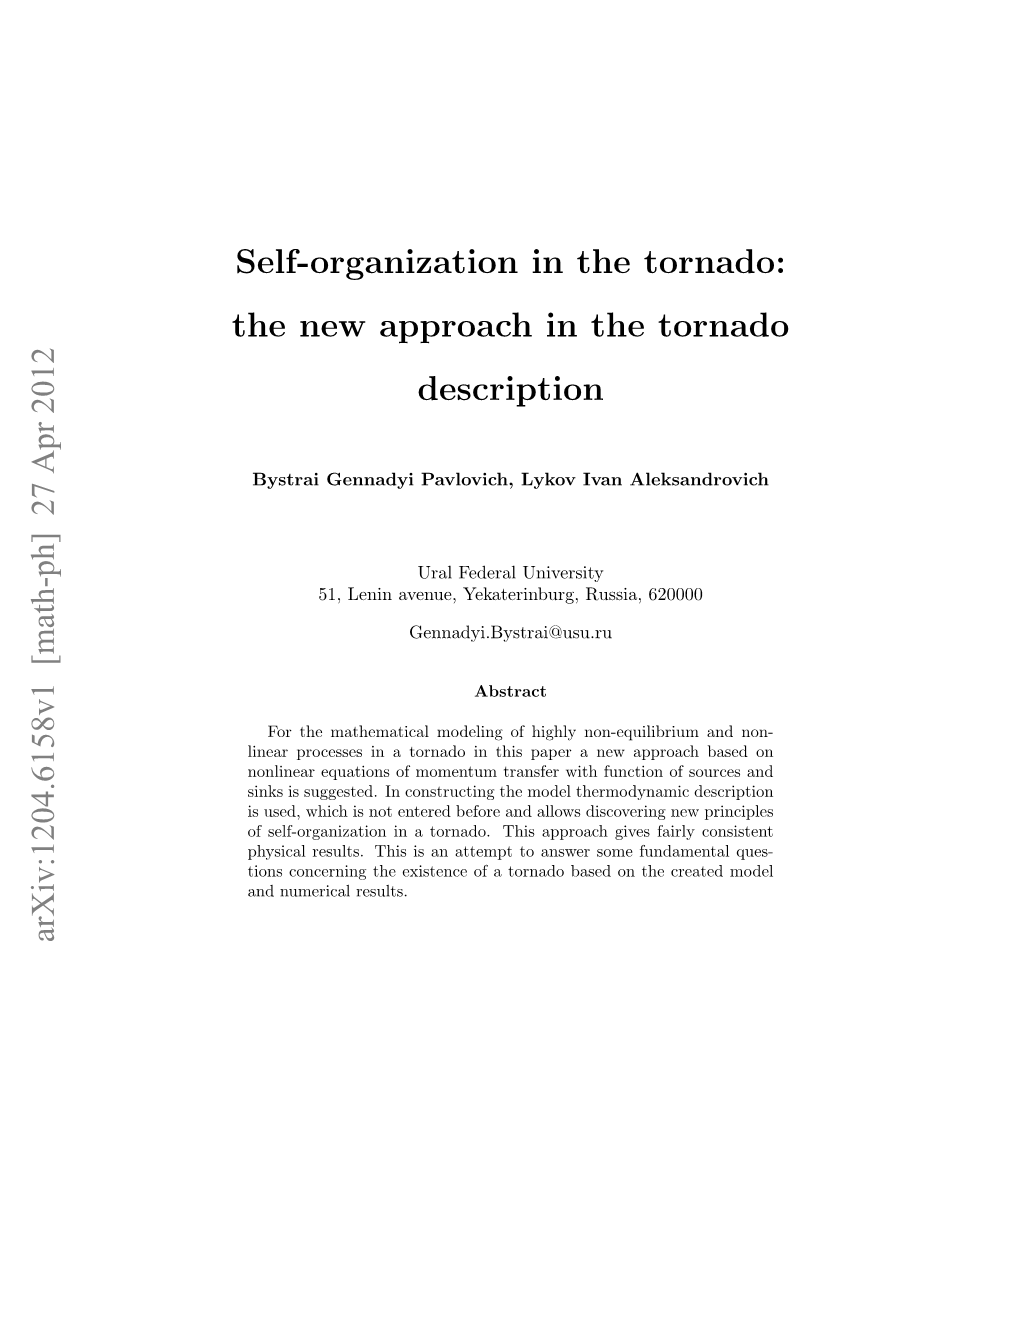 Self-Organization in the Tornado: the New Approach in the Tornado Description Arxiv:1204.6158V1 [Math-Ph] 27 Apr 2012